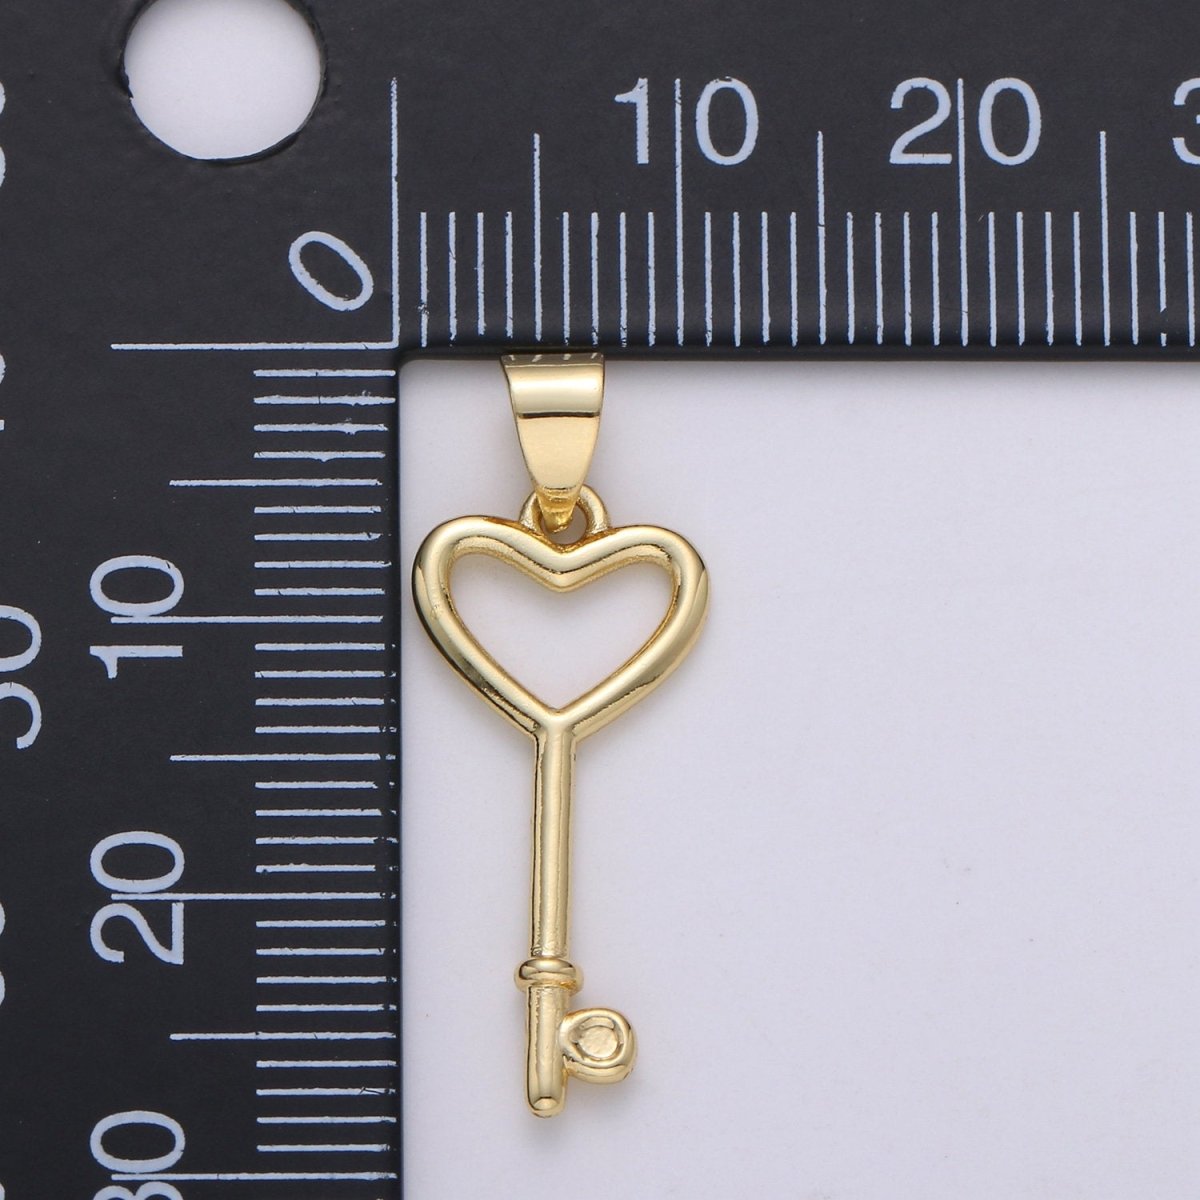 14k Gold Filled Key Pendant Charm, Dainty Heart Key Pendant Charm, Gold Filled Key Pendant, For DIY Jewelry Making Supply J-005 - DLUXCA